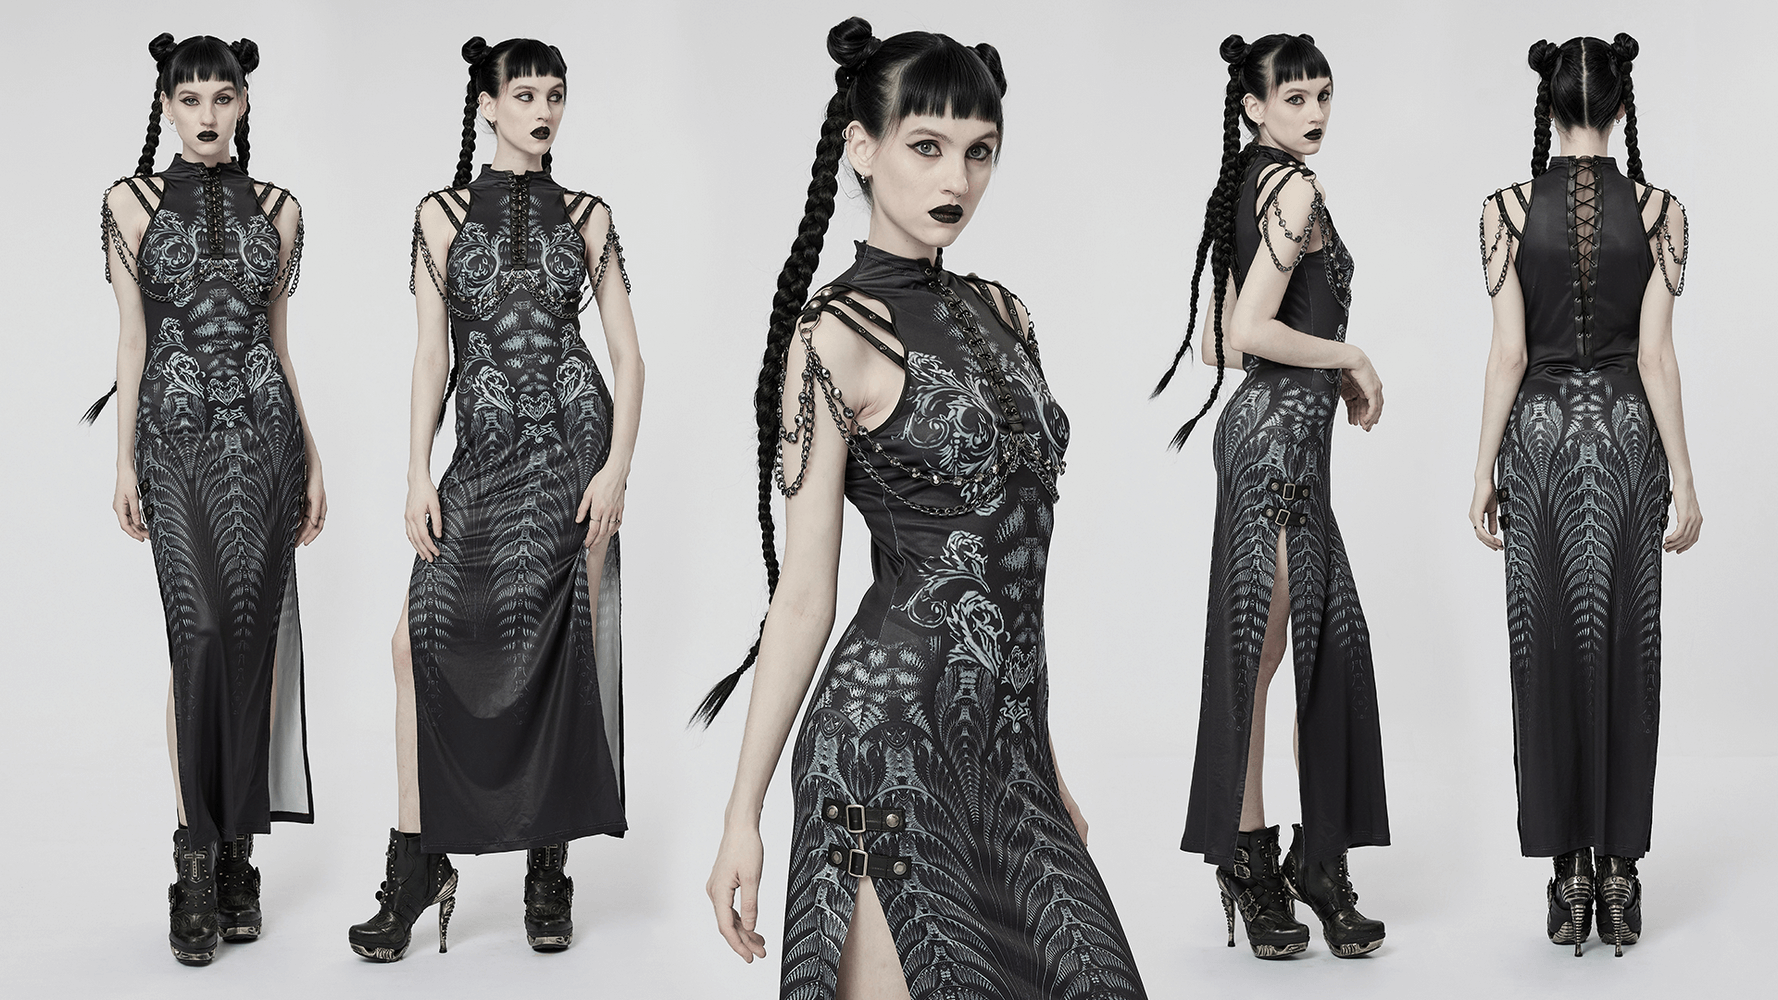 Stylish Women's Futuristic Sci-Fi Printed Dress